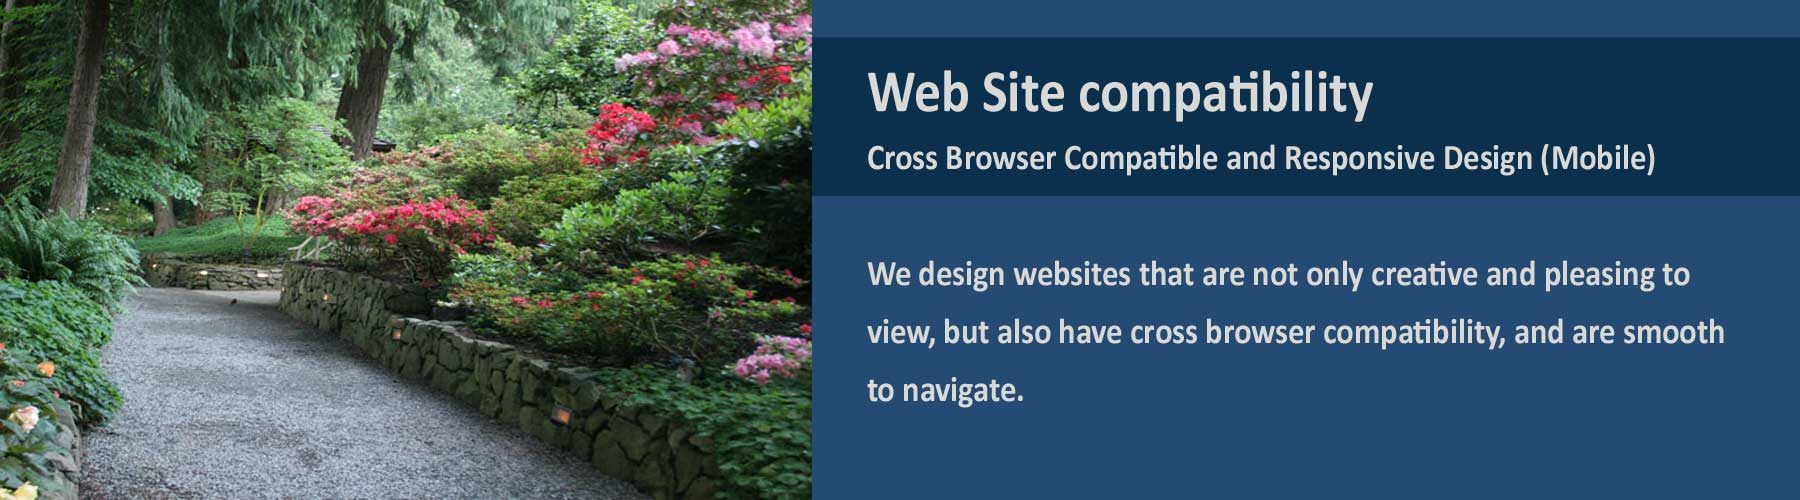 websitecompatibility